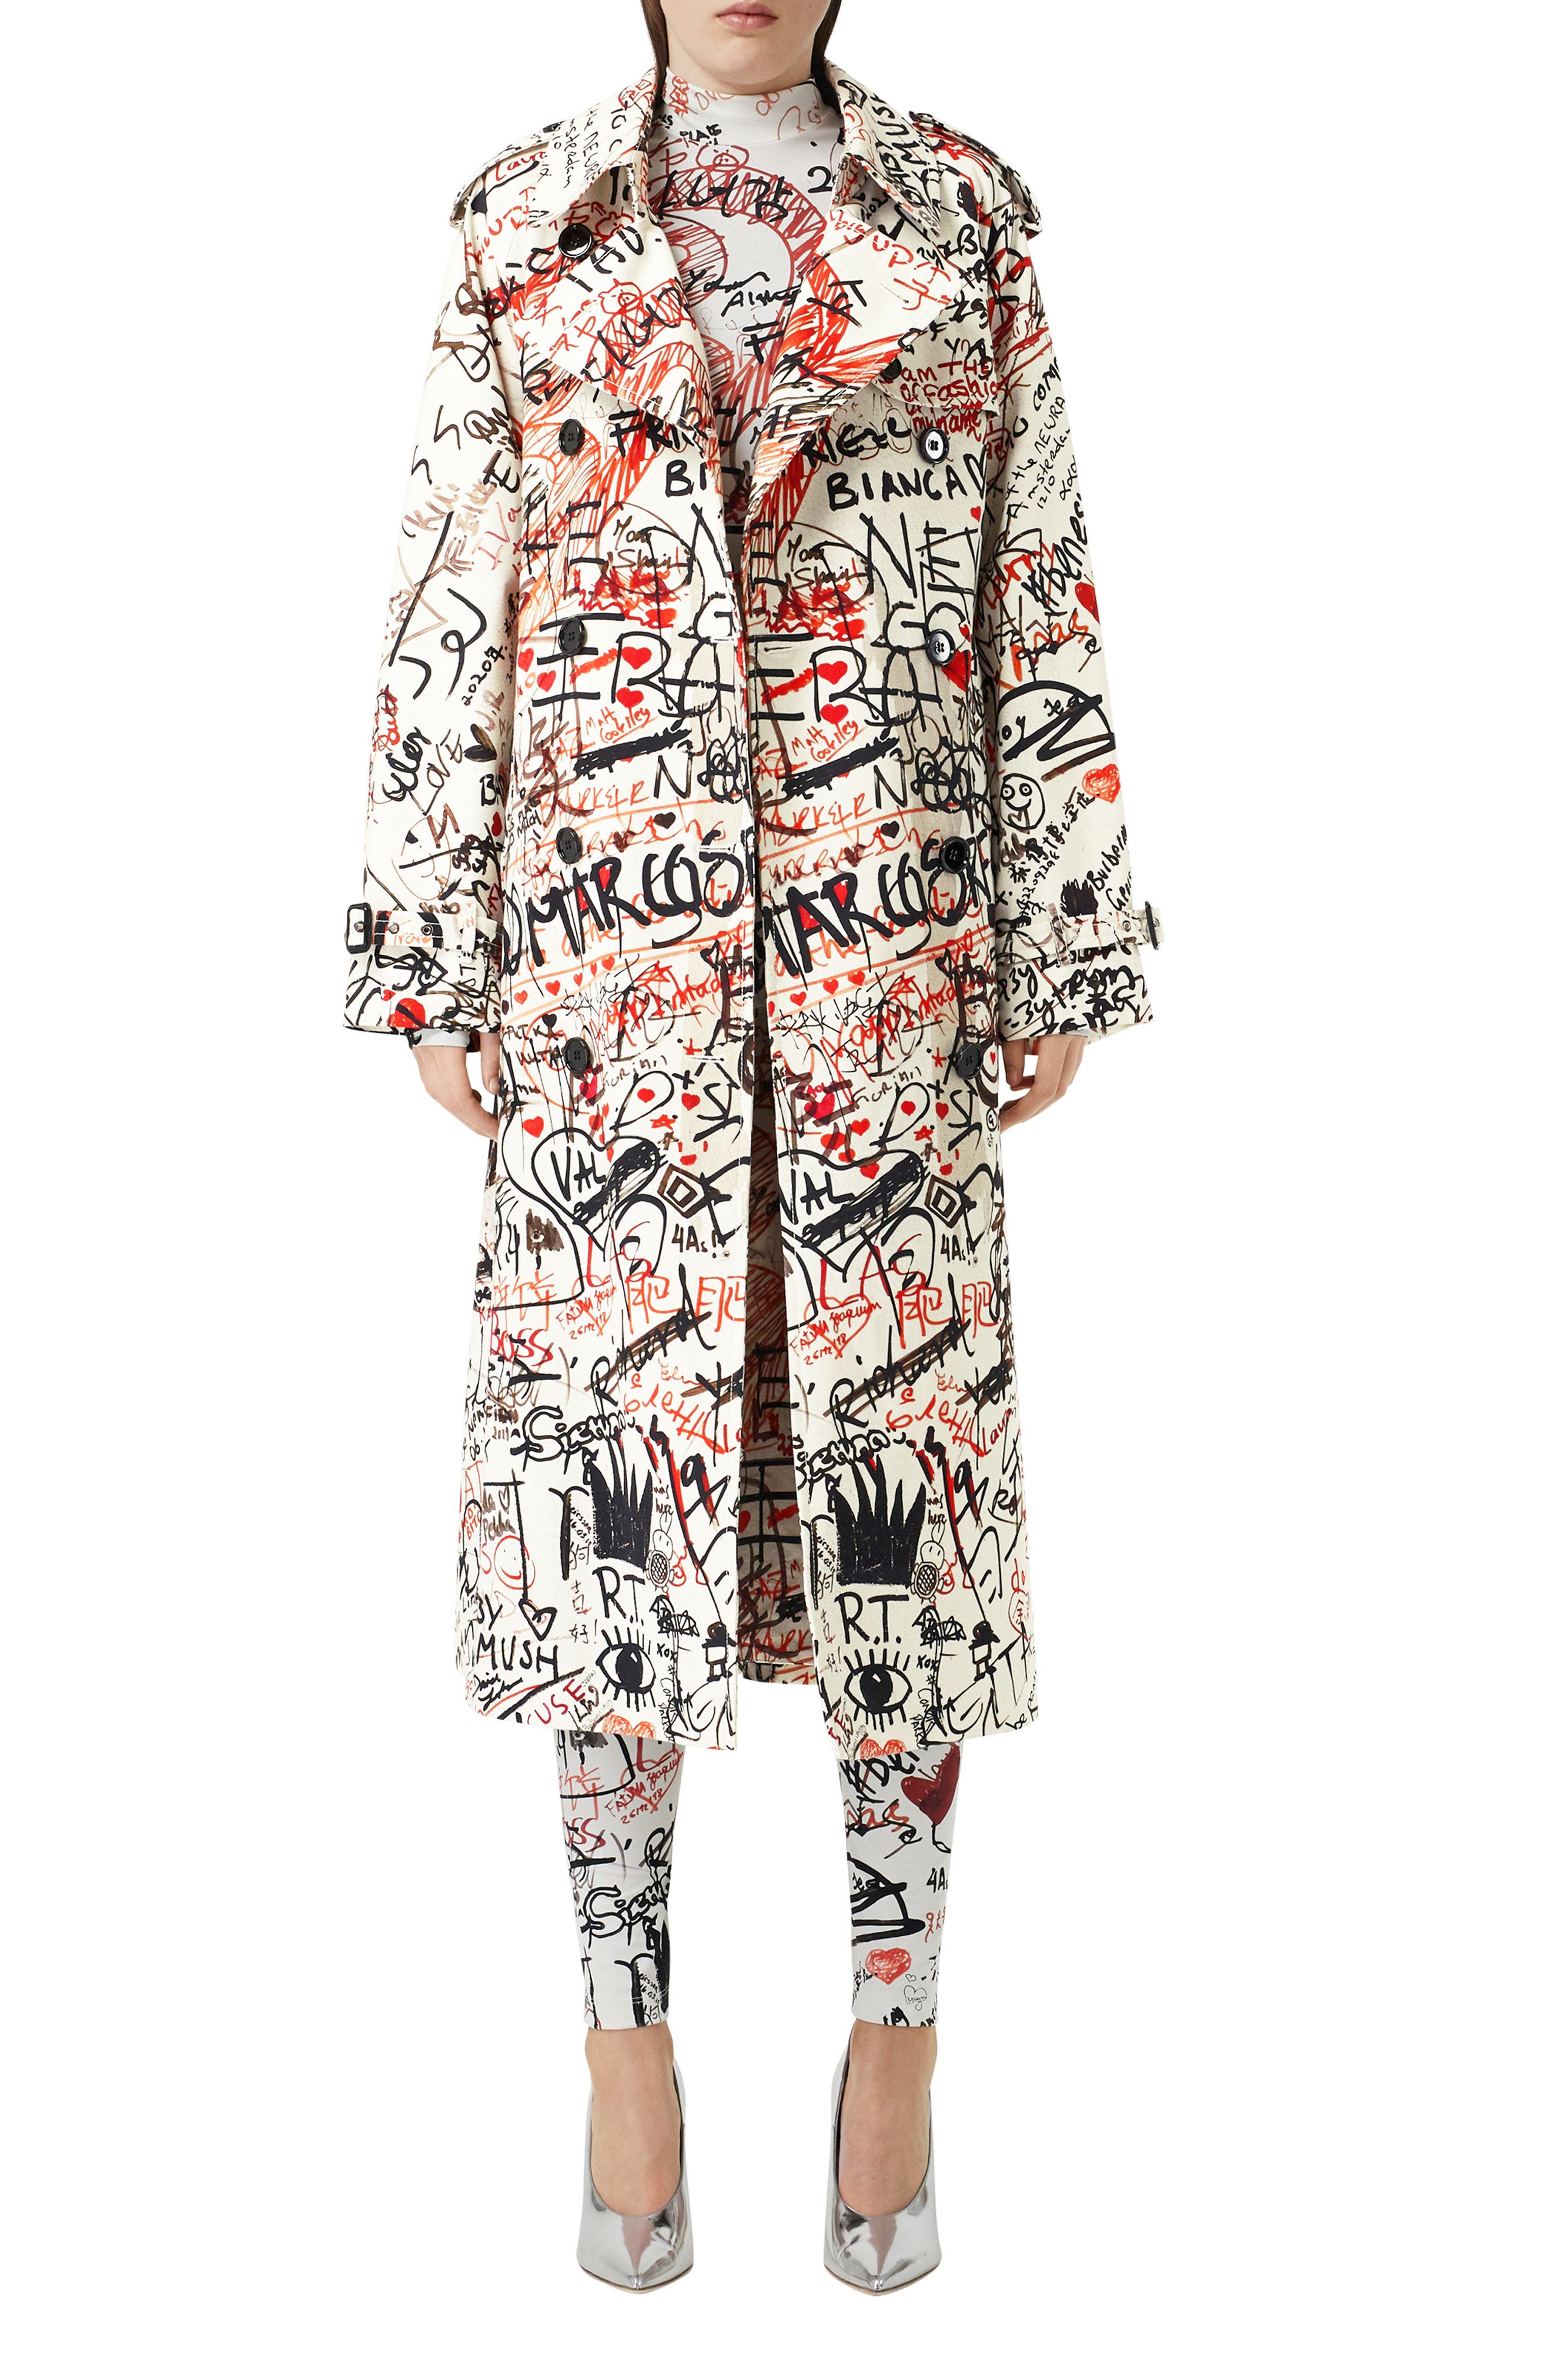 burberry graffiti trench coat